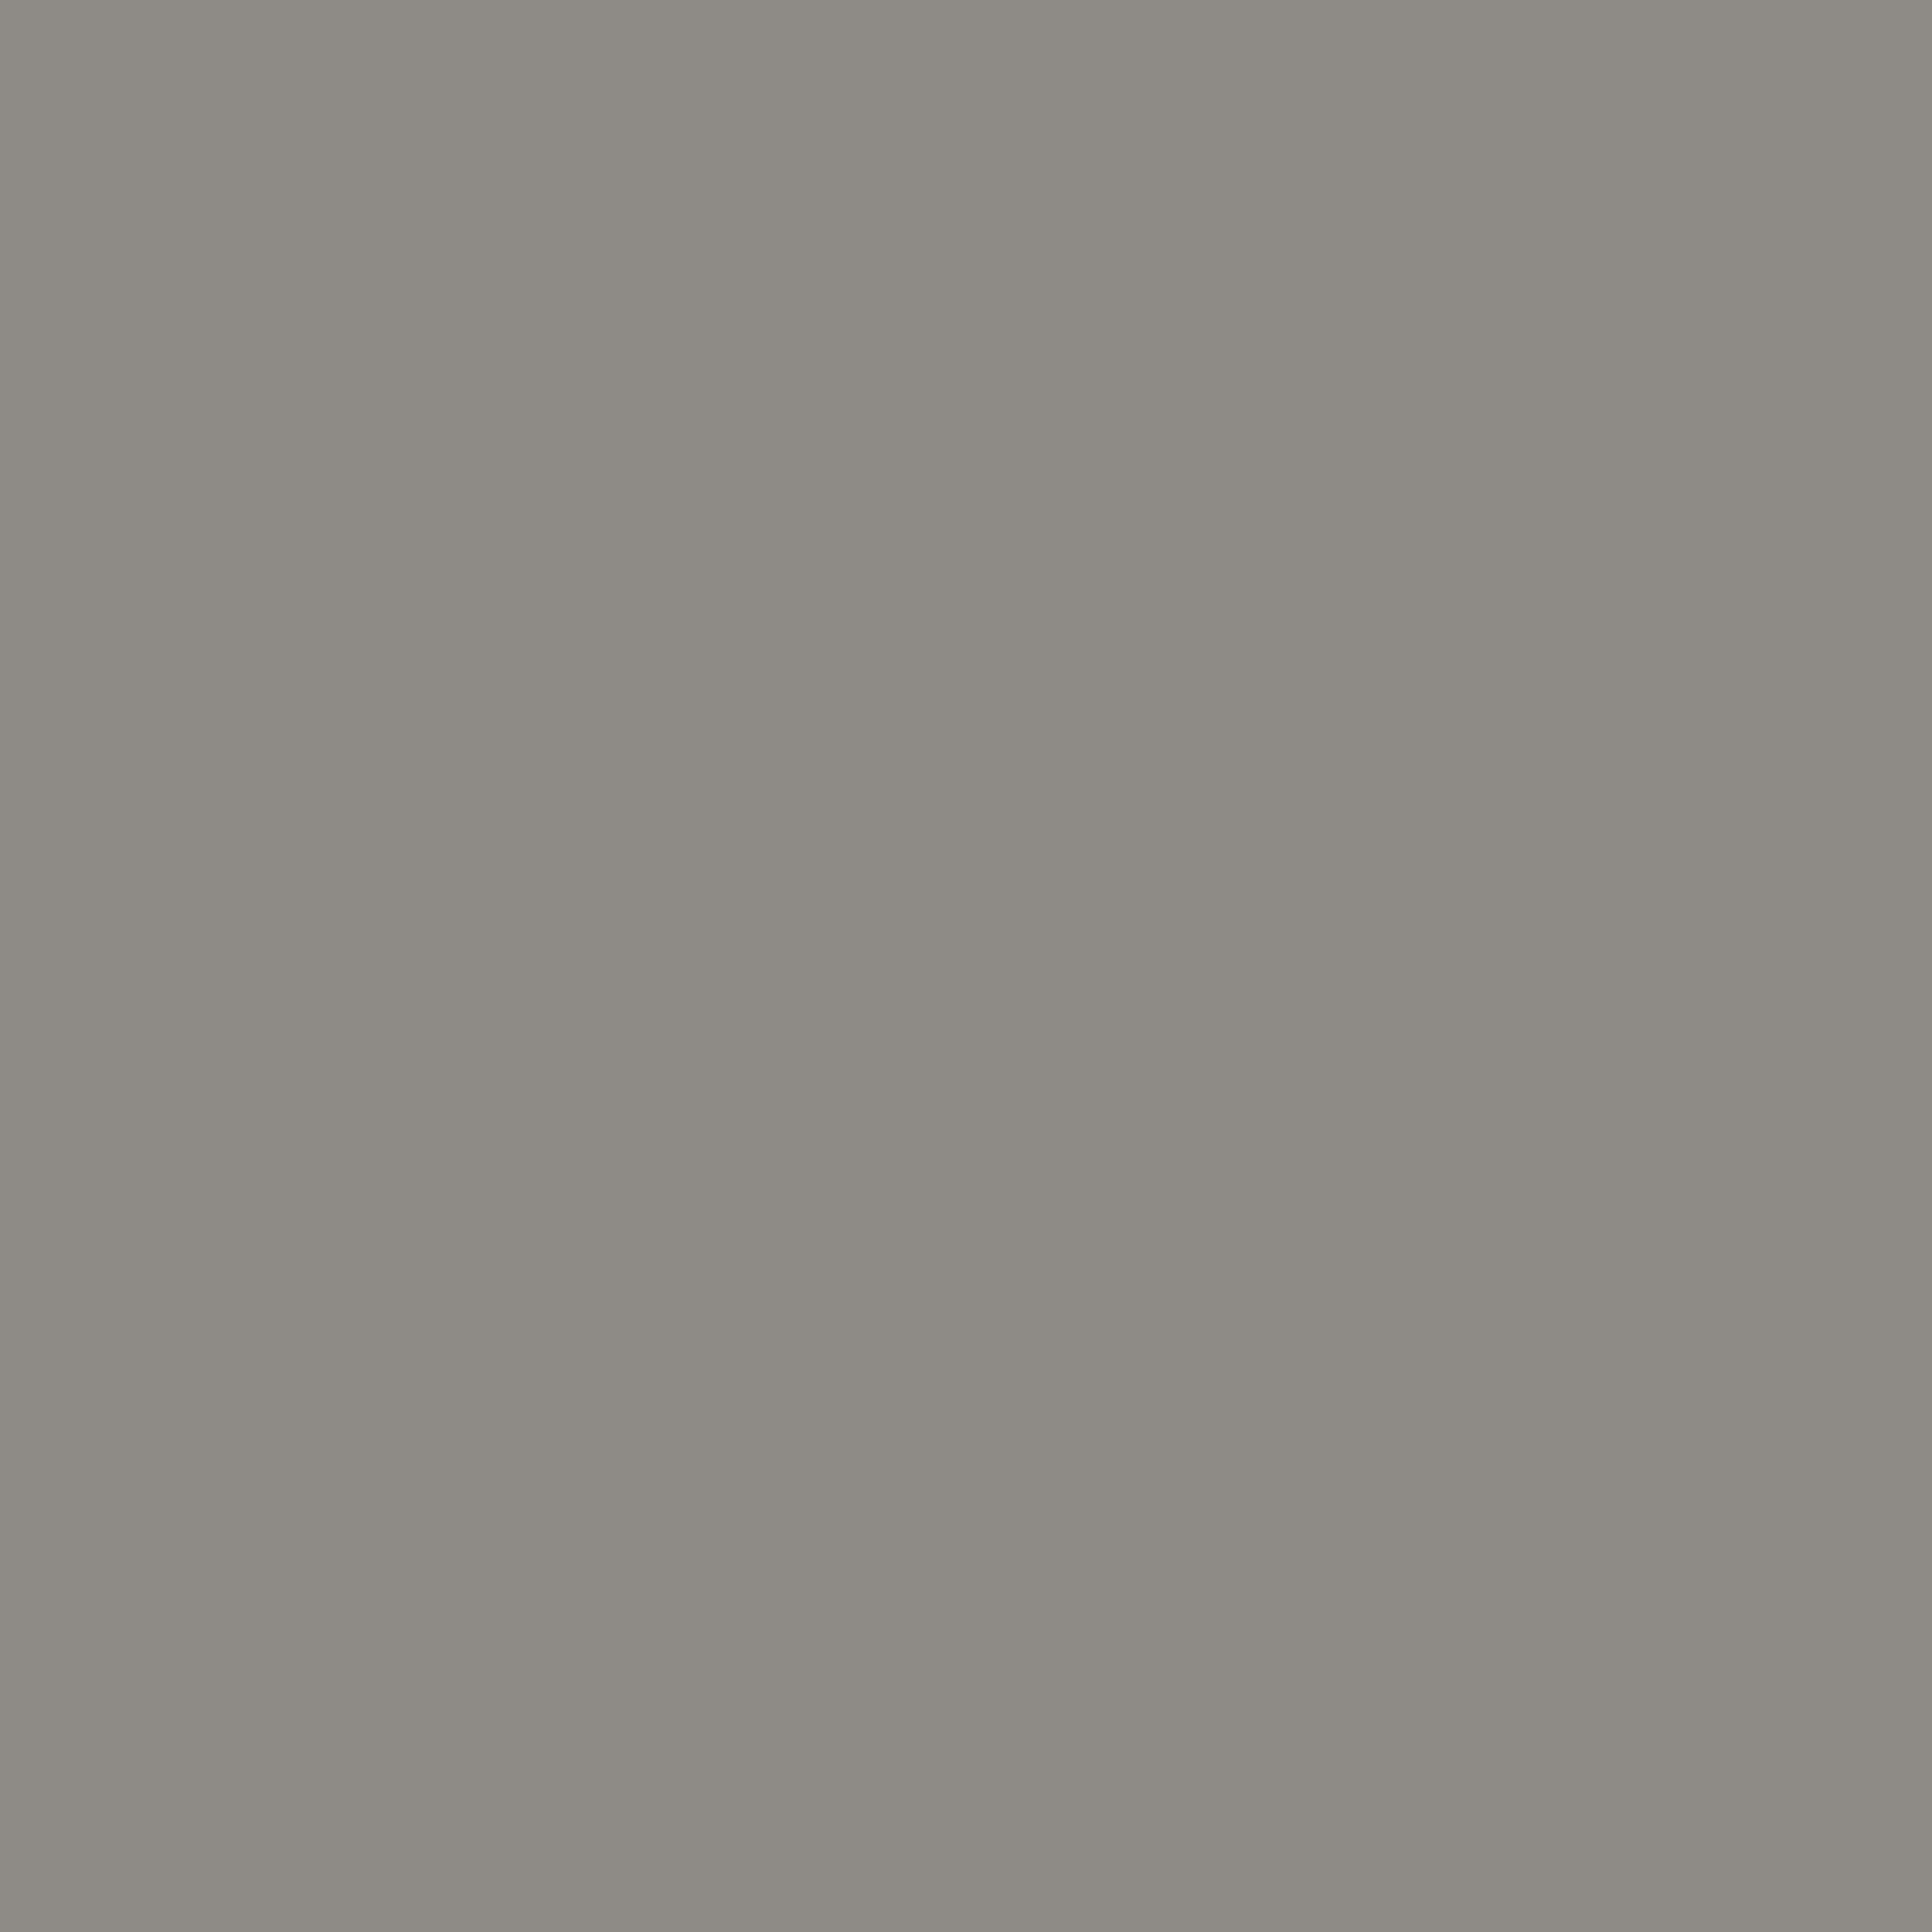 72052 Servet granite grey 3lgs.40cm.1/4  8x125st